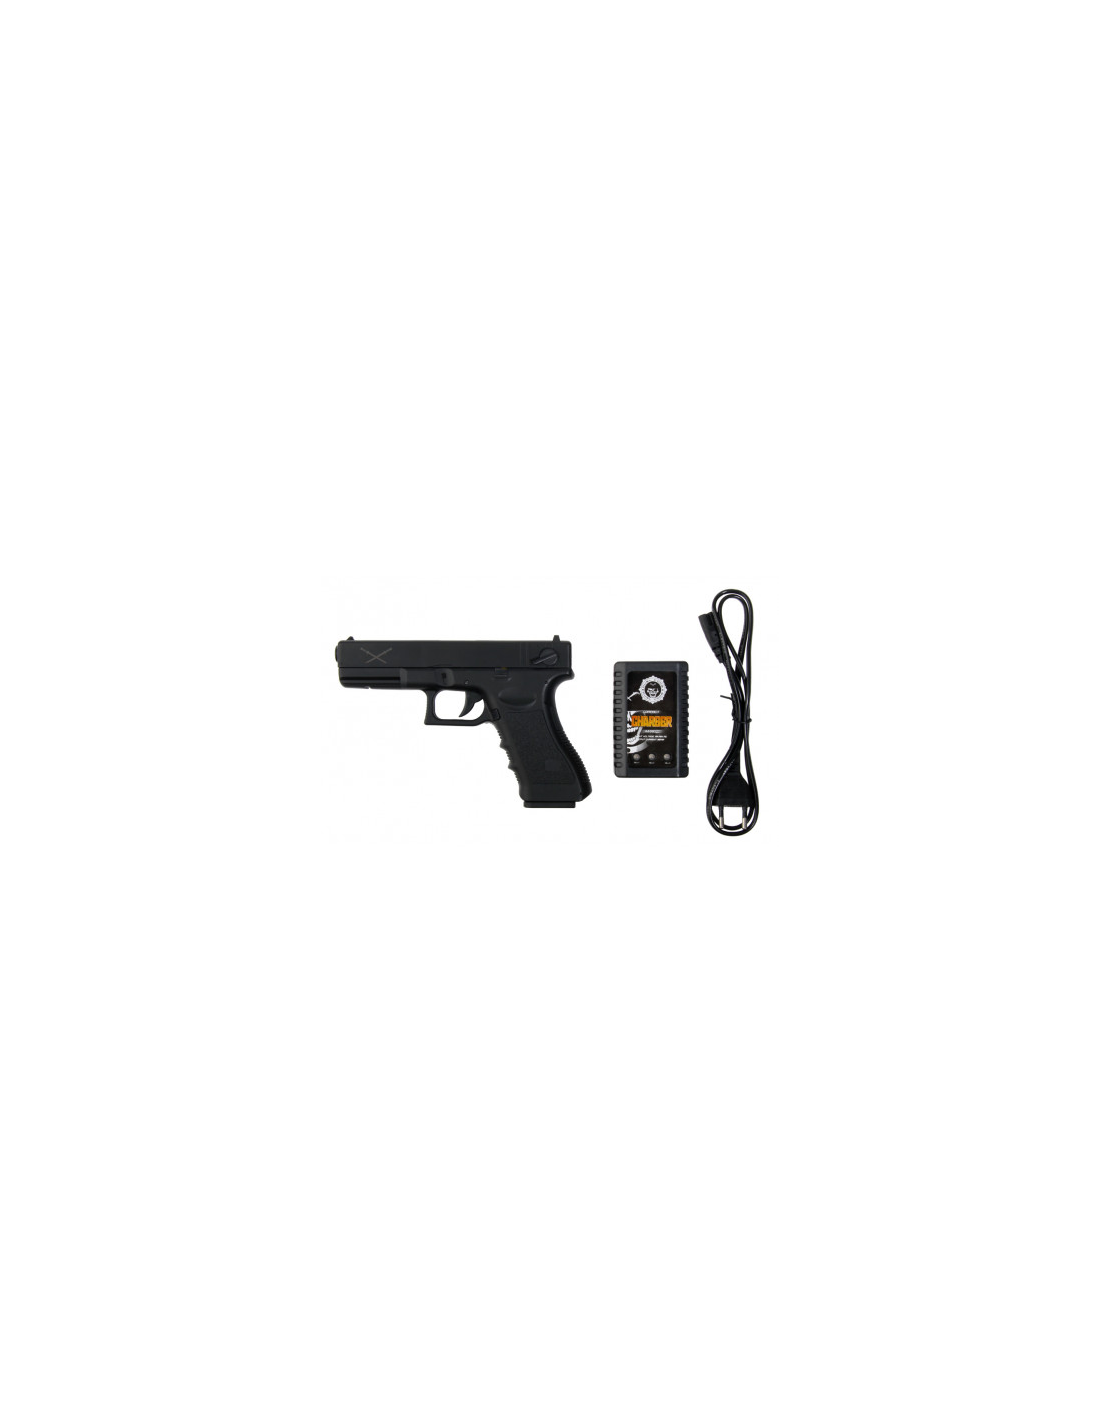 Pistola Yakuza G18 Saigo Eléctrica /